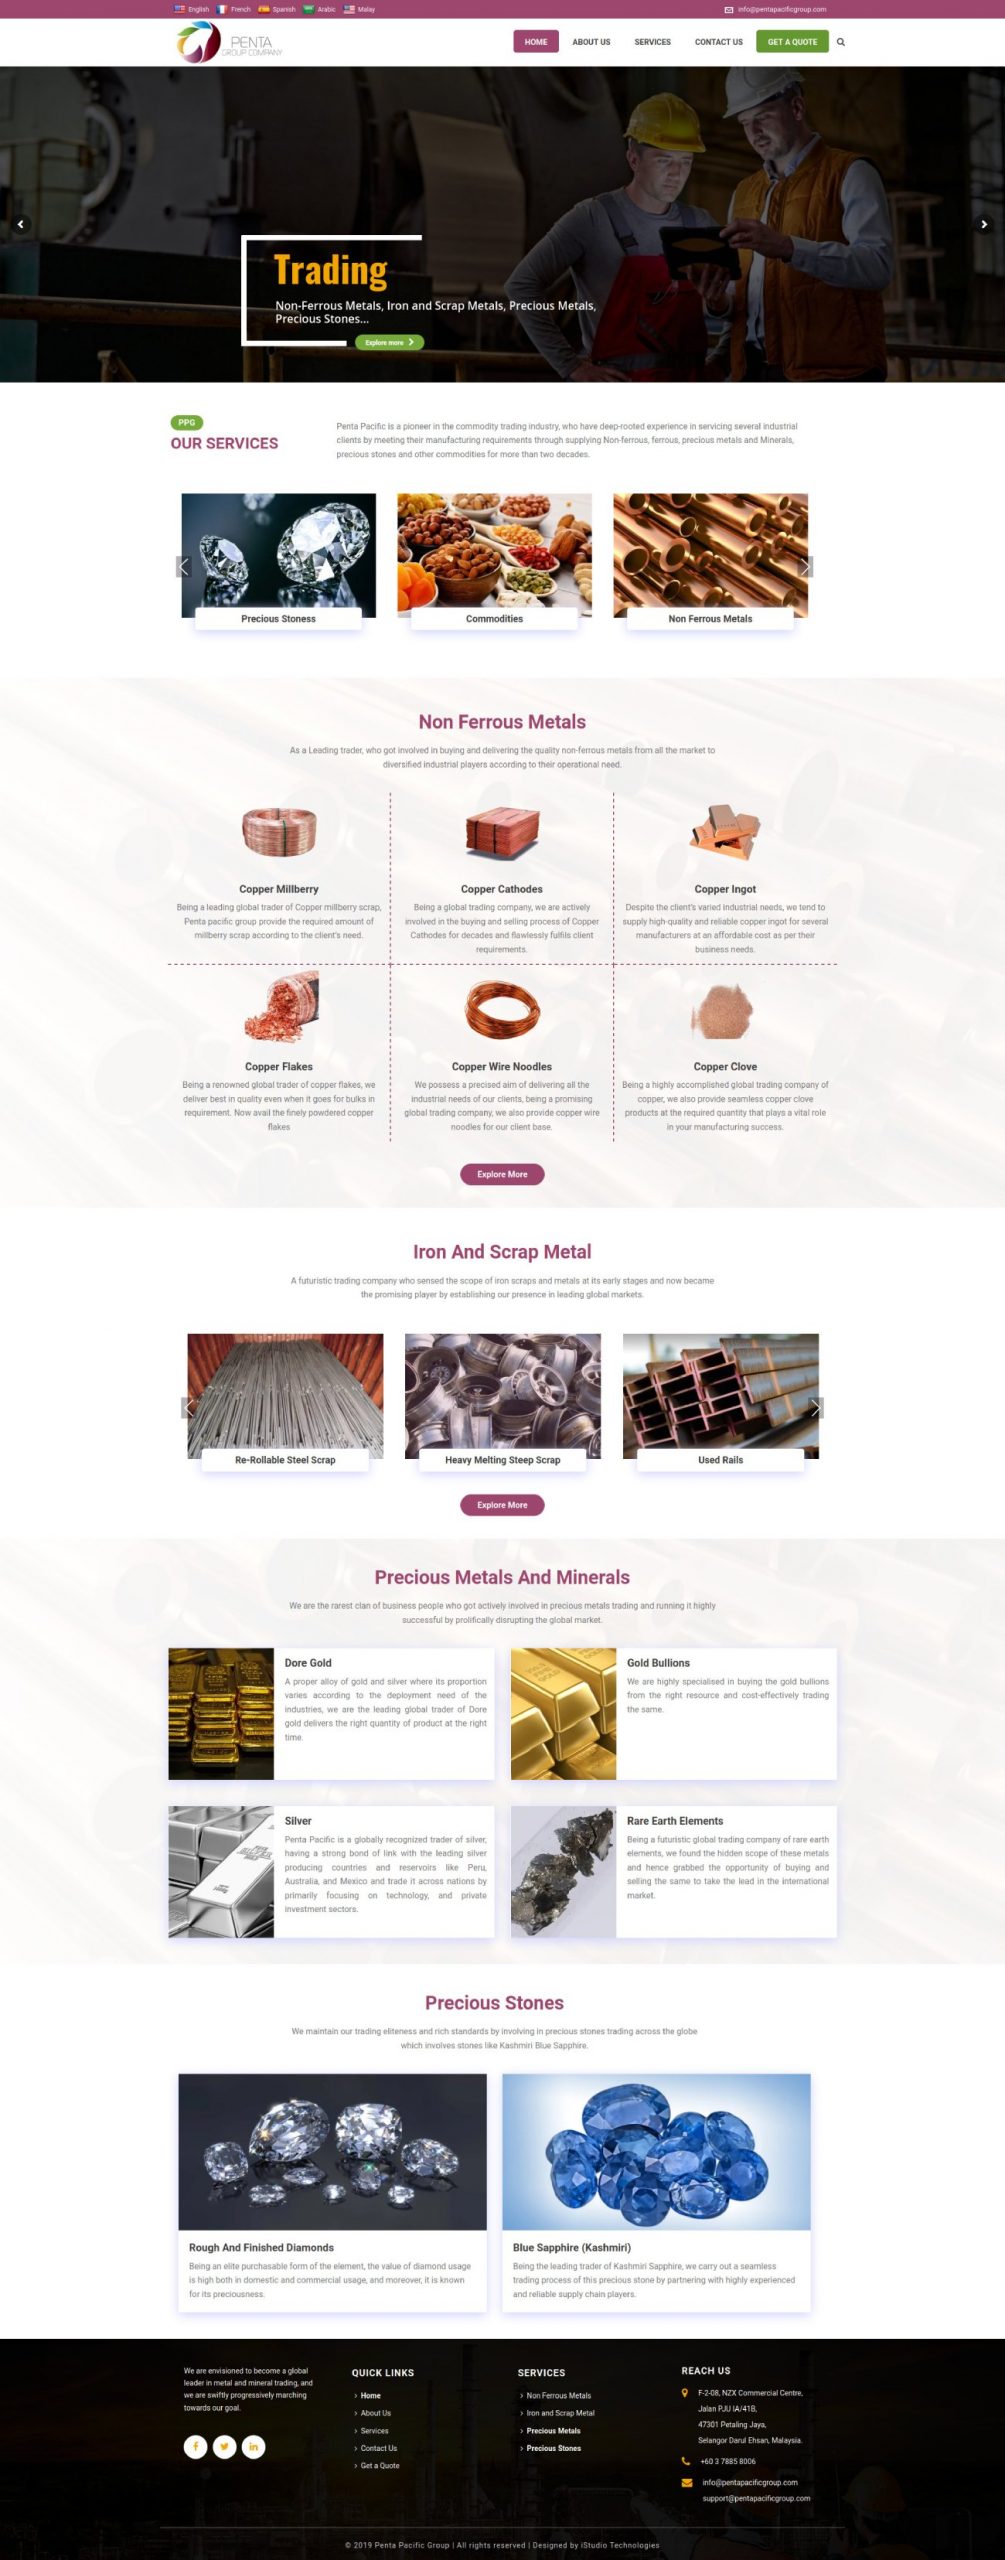 Penta Pacific Group -homepage - iStudio Technologies